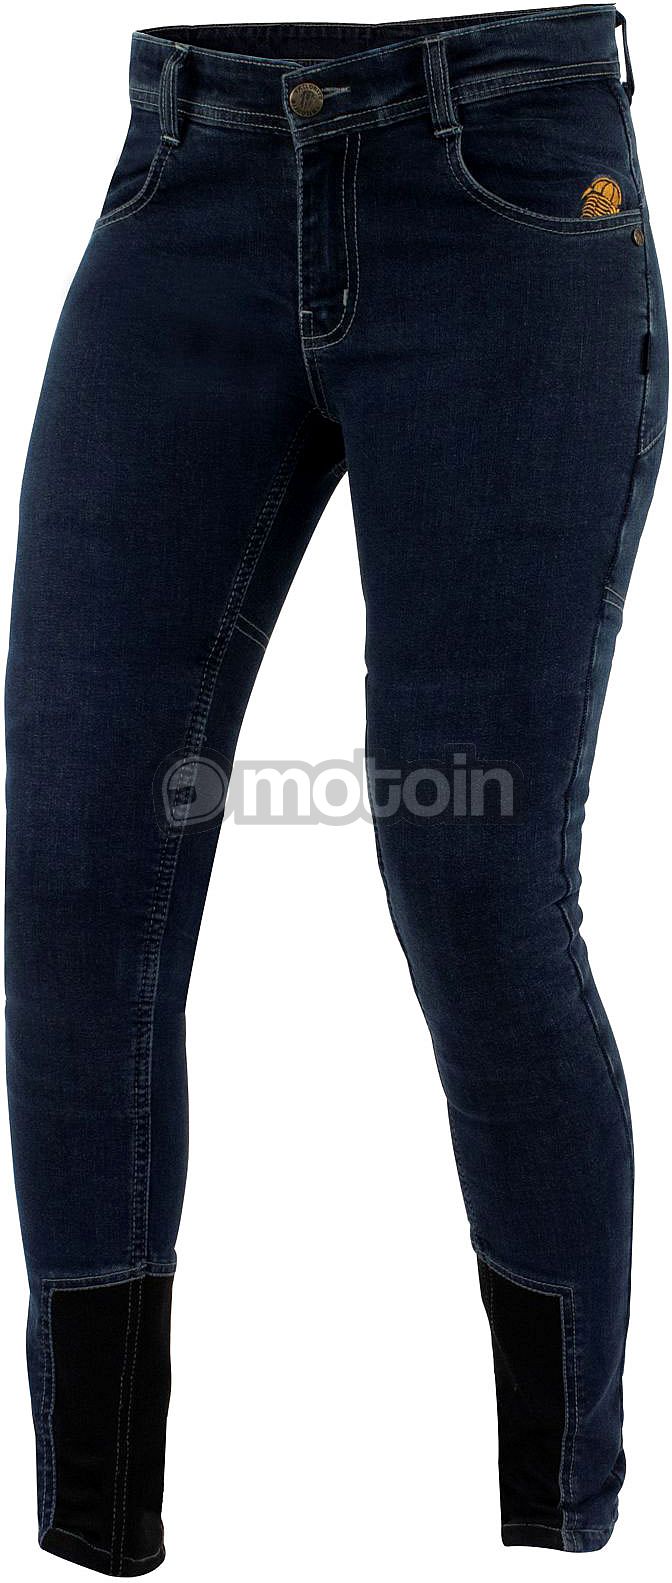 Trilobite All Shape, jeans daring fit women